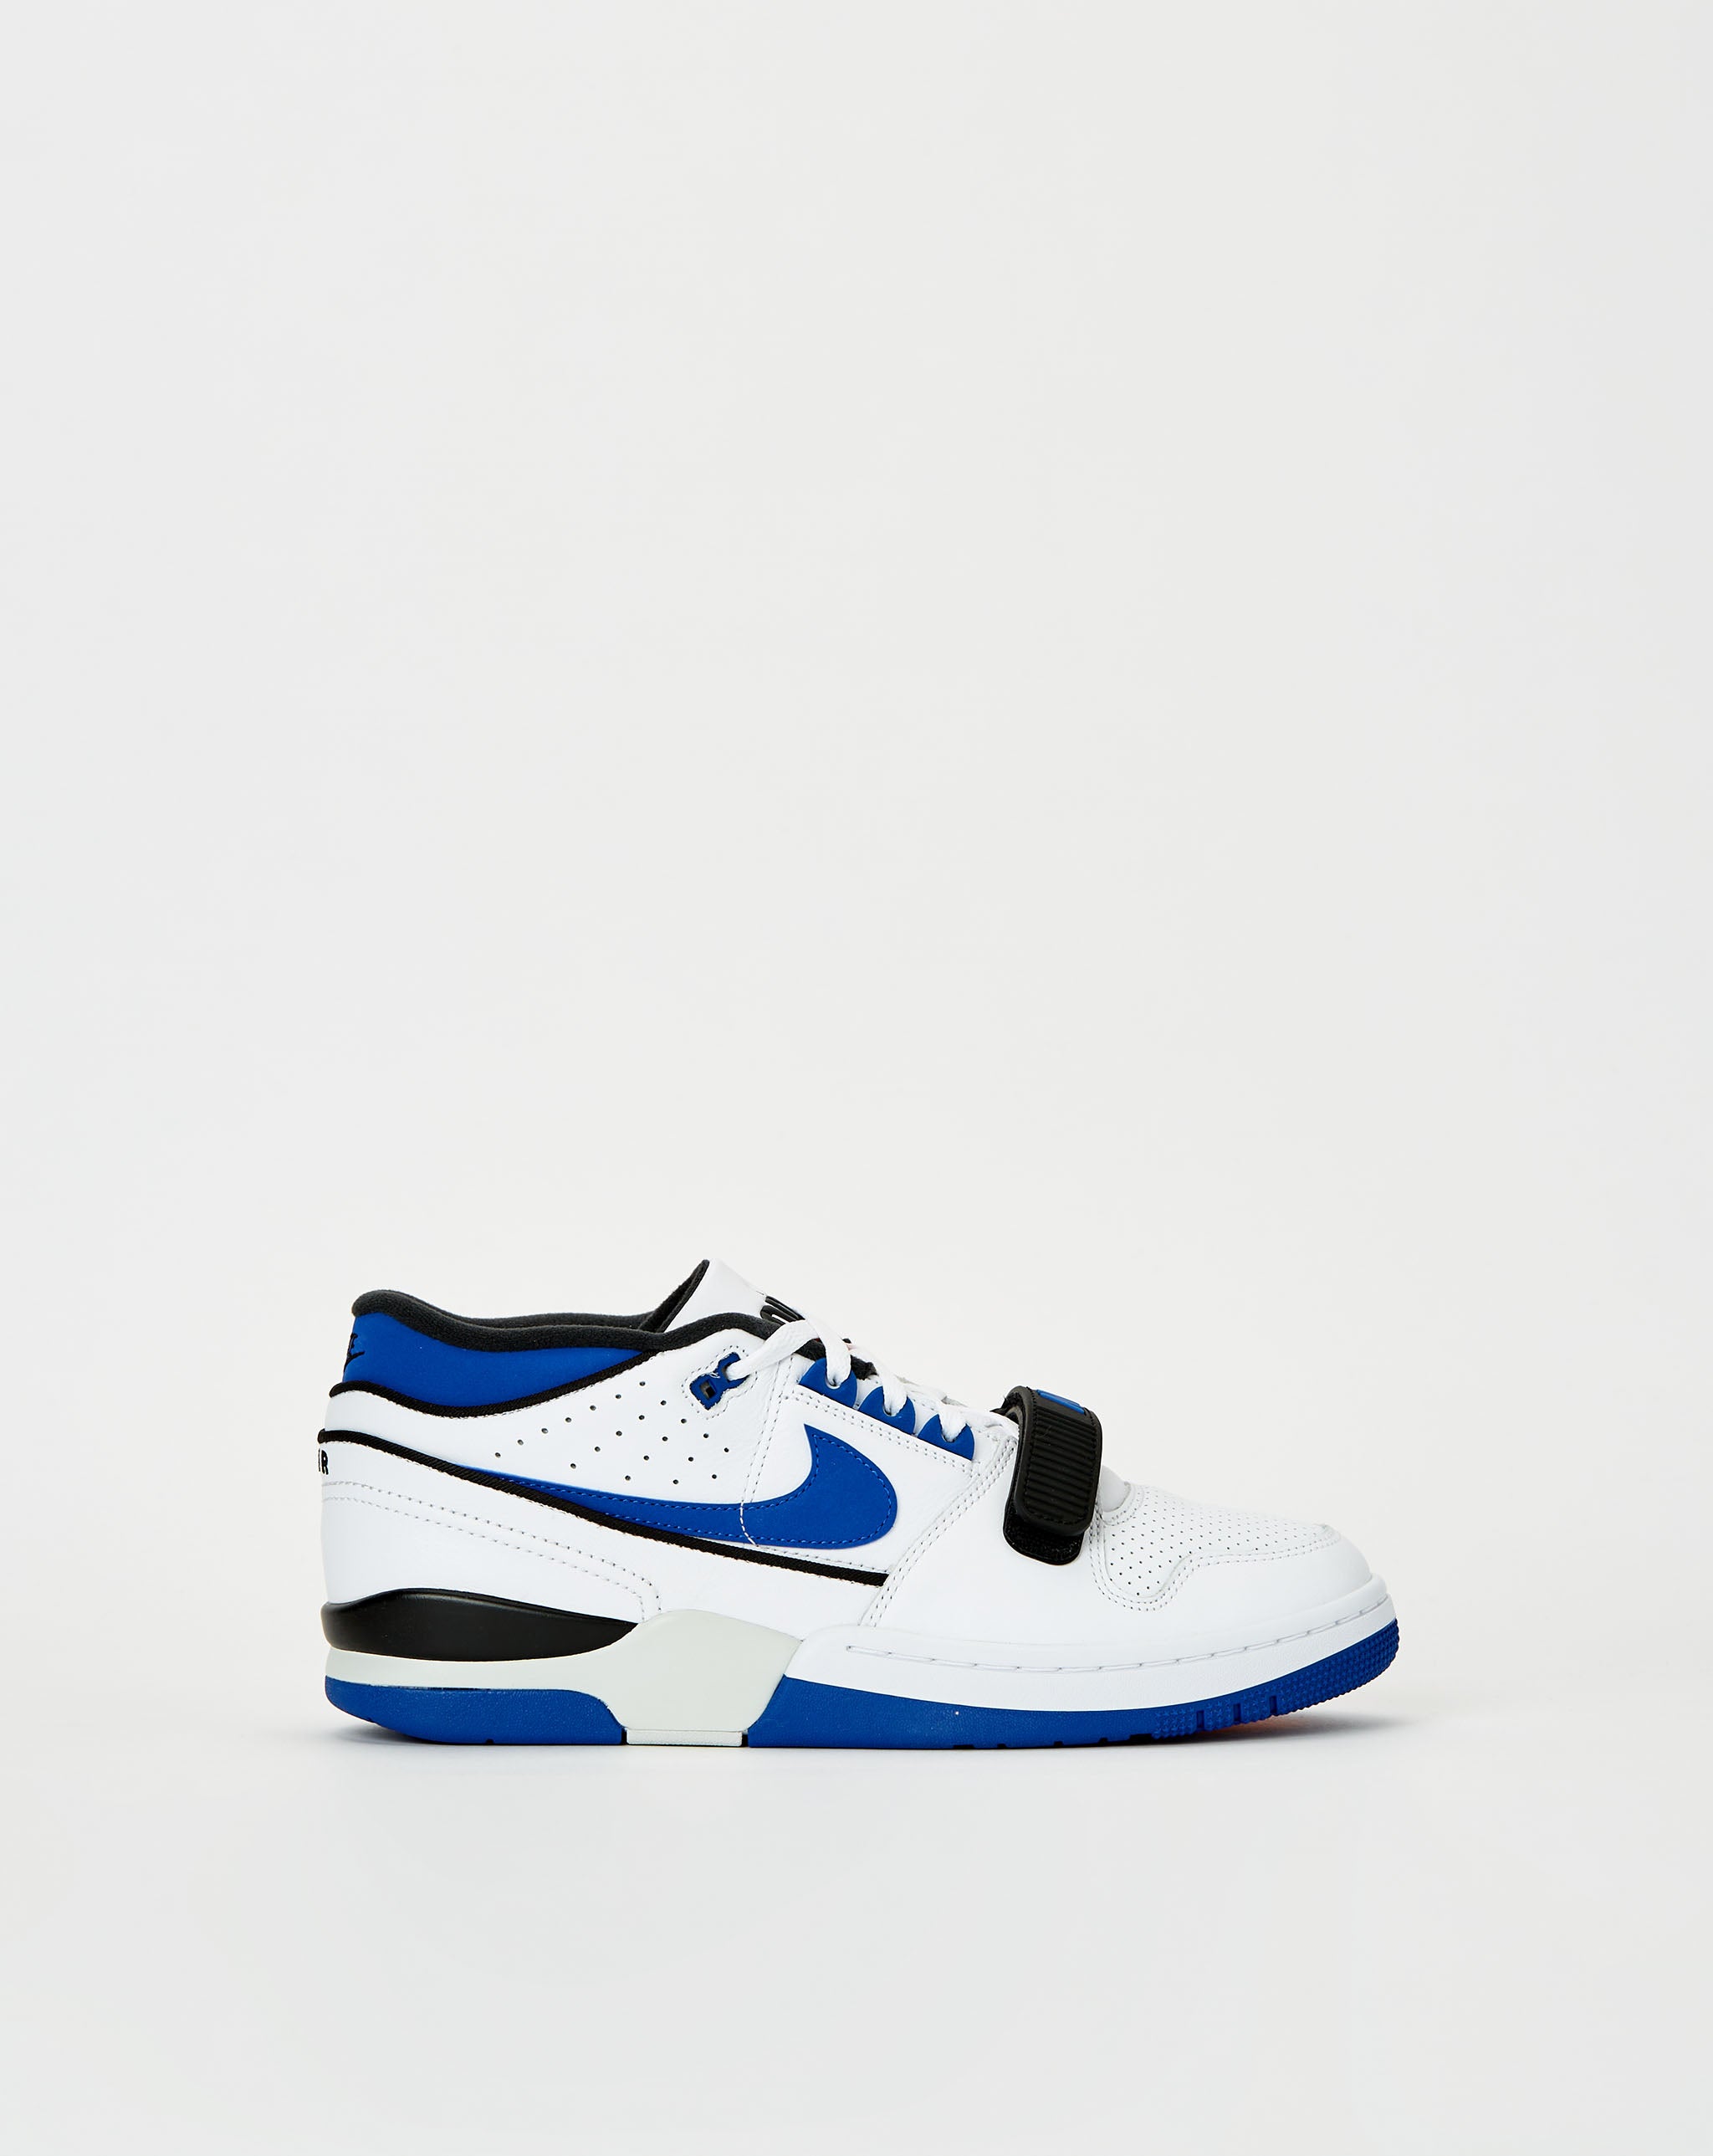 Nike tods white shoes  - Cheap Urlfreeze Jordan outlet